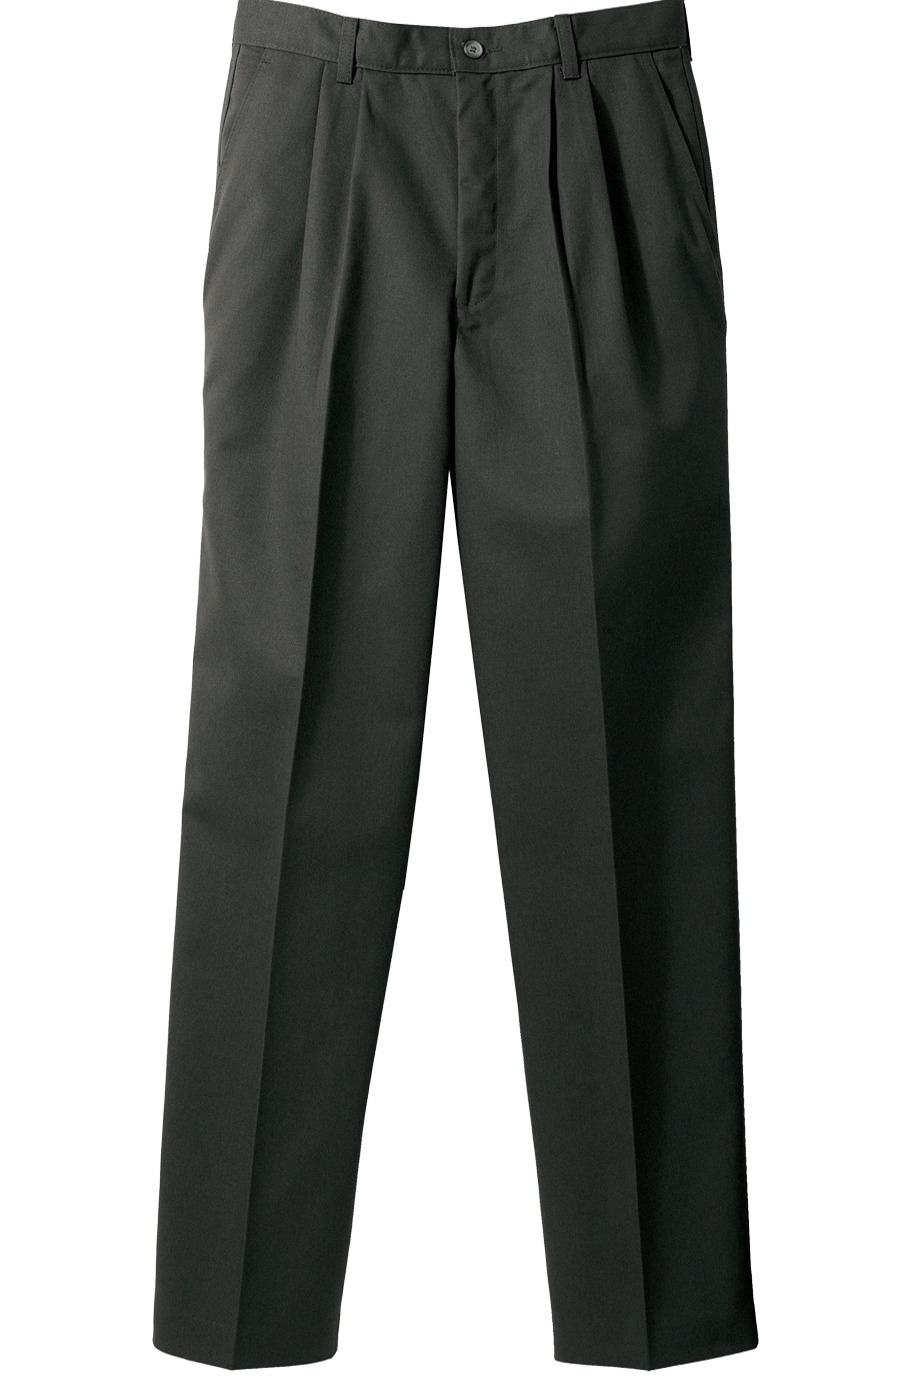 Edwards Garment 2670 - Men's Blended Chino Flat Front Pant